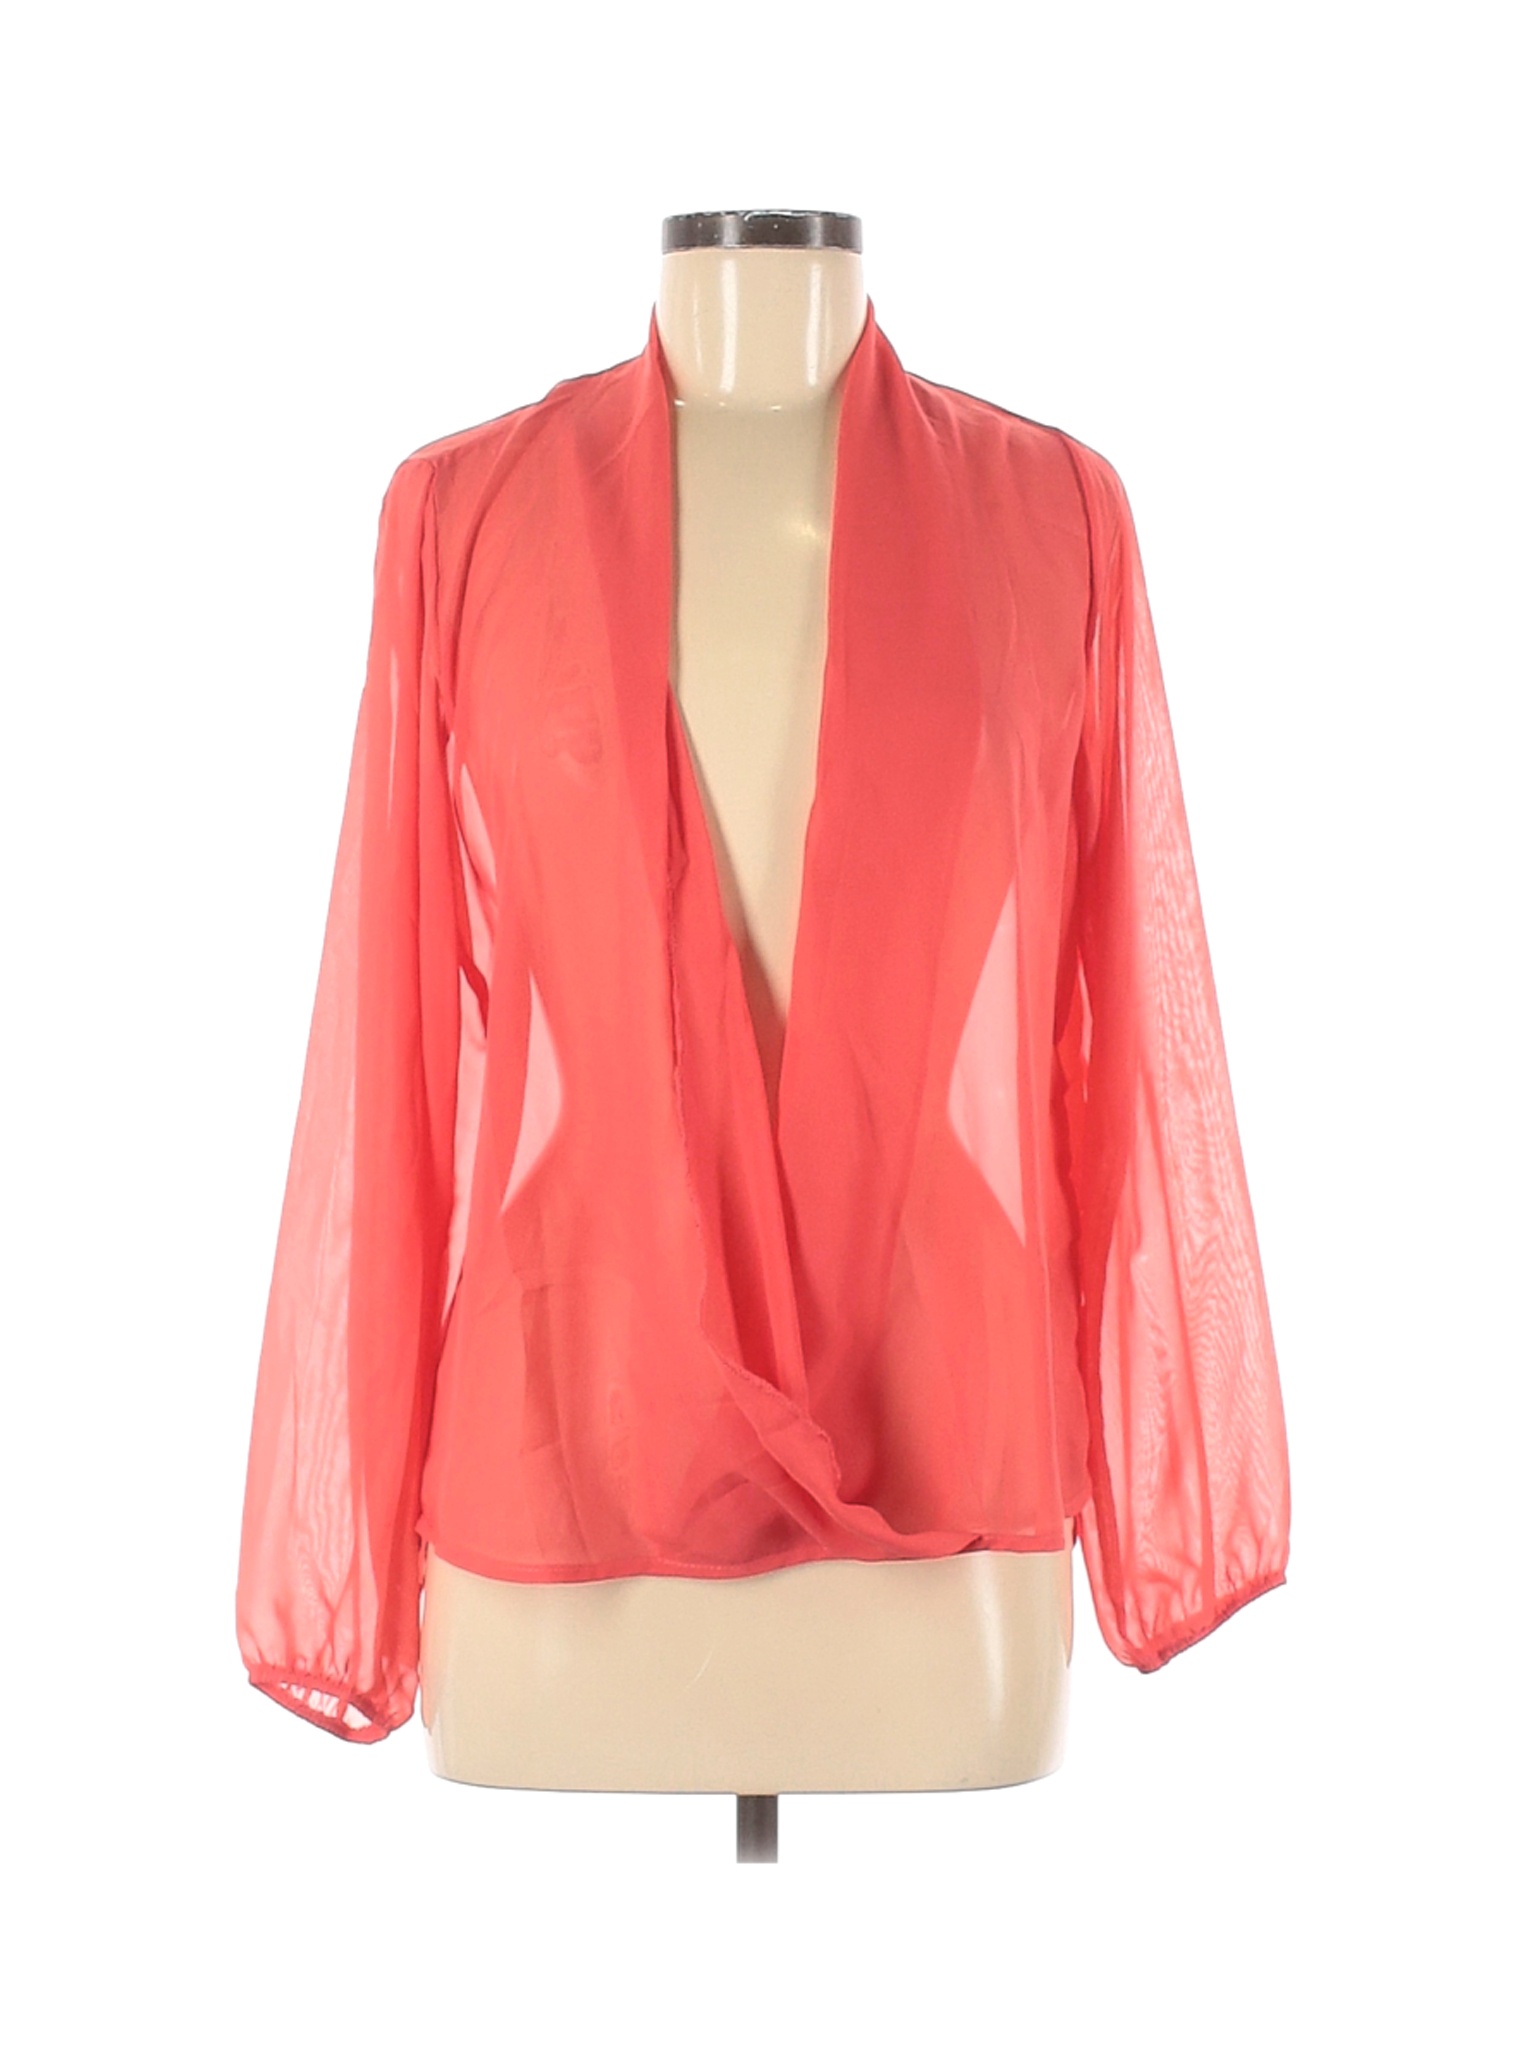 Artizan Robin barre Women Pink Long Sleeve Blouse M | eBay